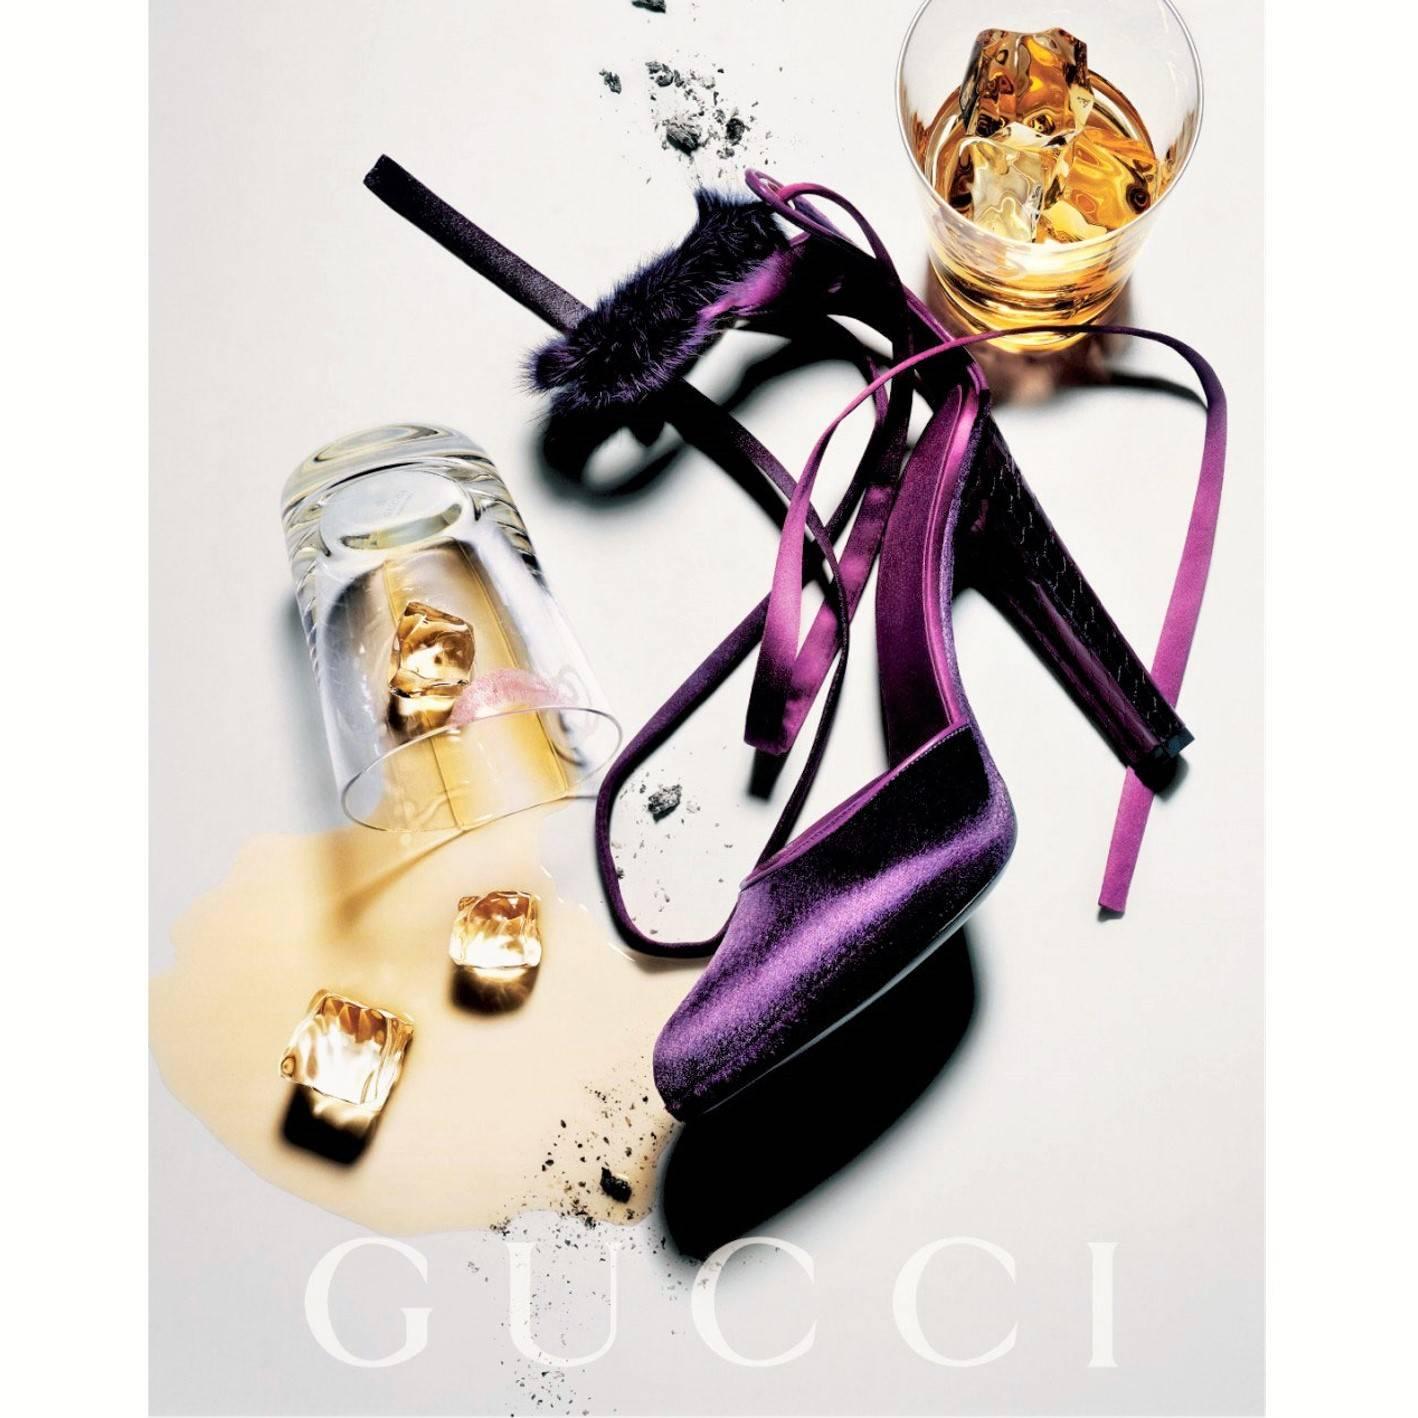 Tom Ford for Gucci Mink Python Heels
Brand New
U.S. Size: 7
* Mink, Satin, Python and Velvet heels
* Tom Ford's 